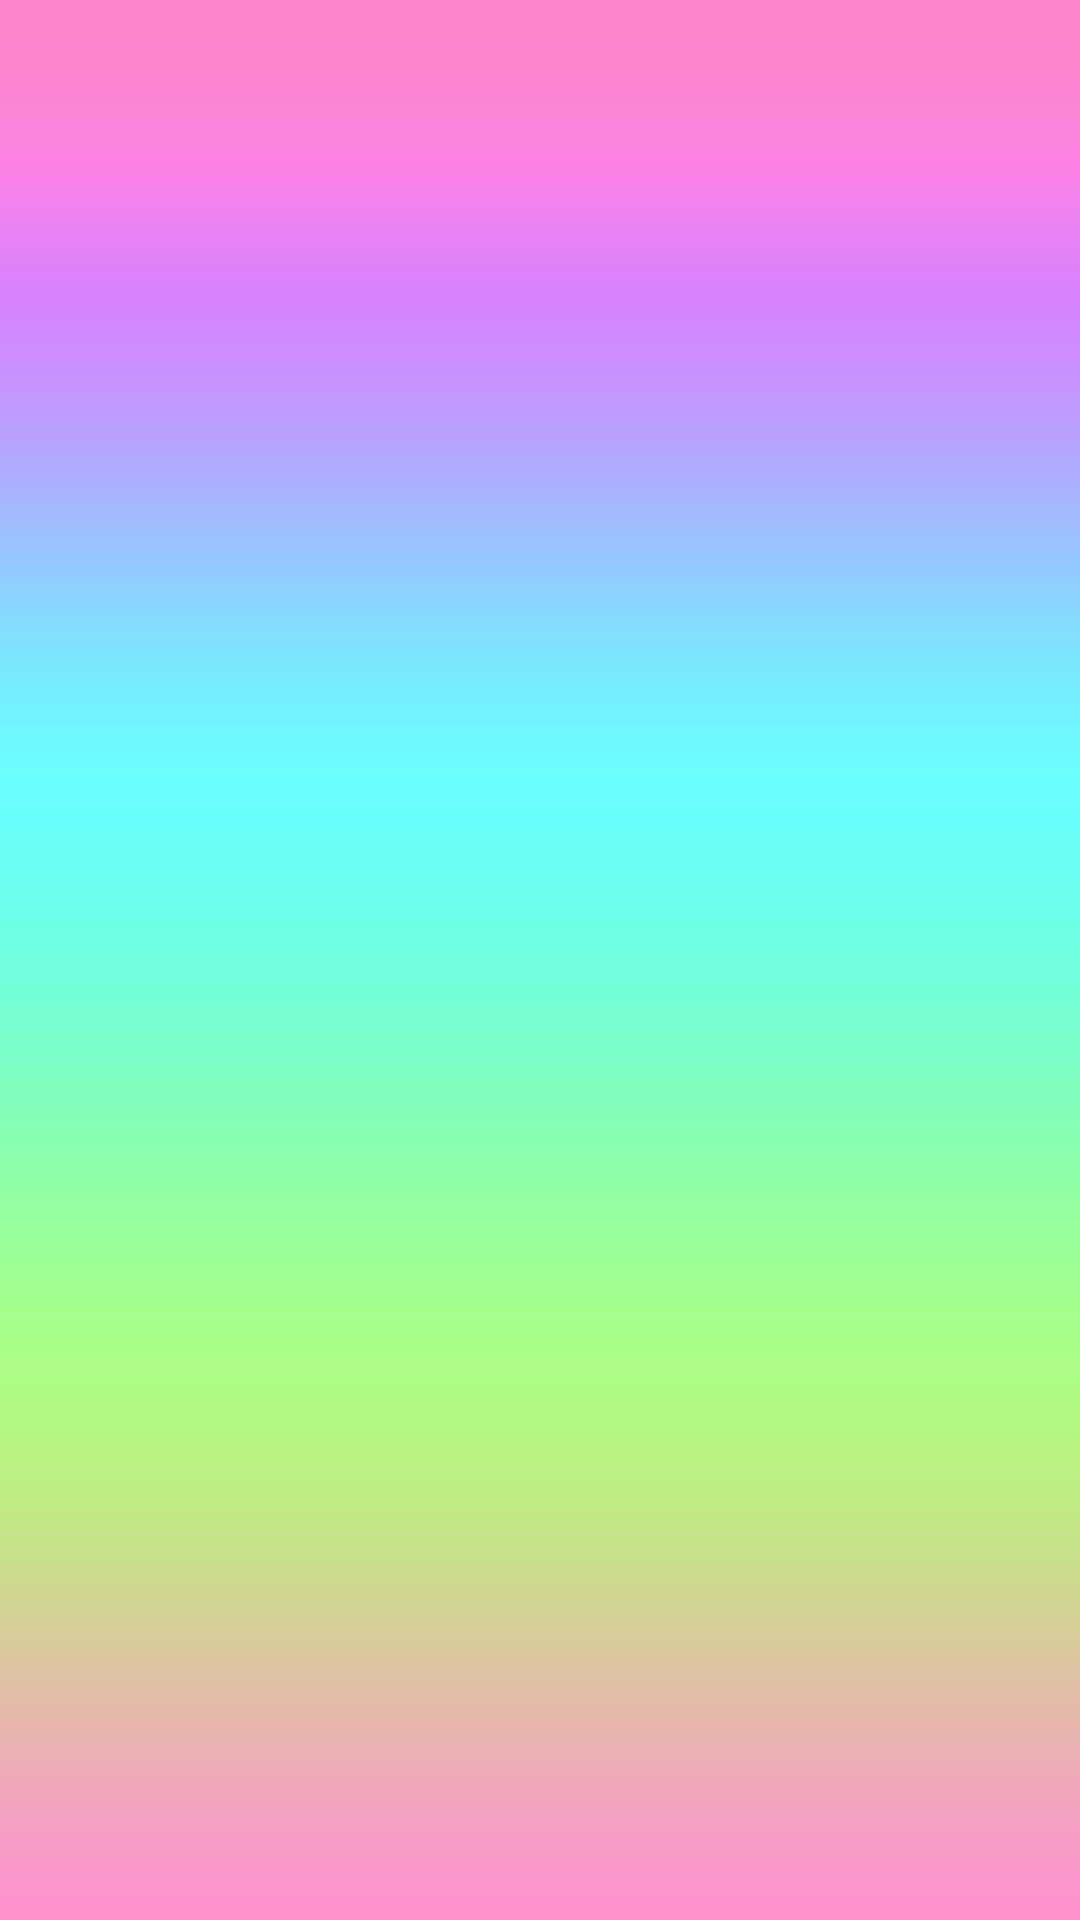 A beautiful pastel rainbow adorns this sleek iPhone Wallpaper